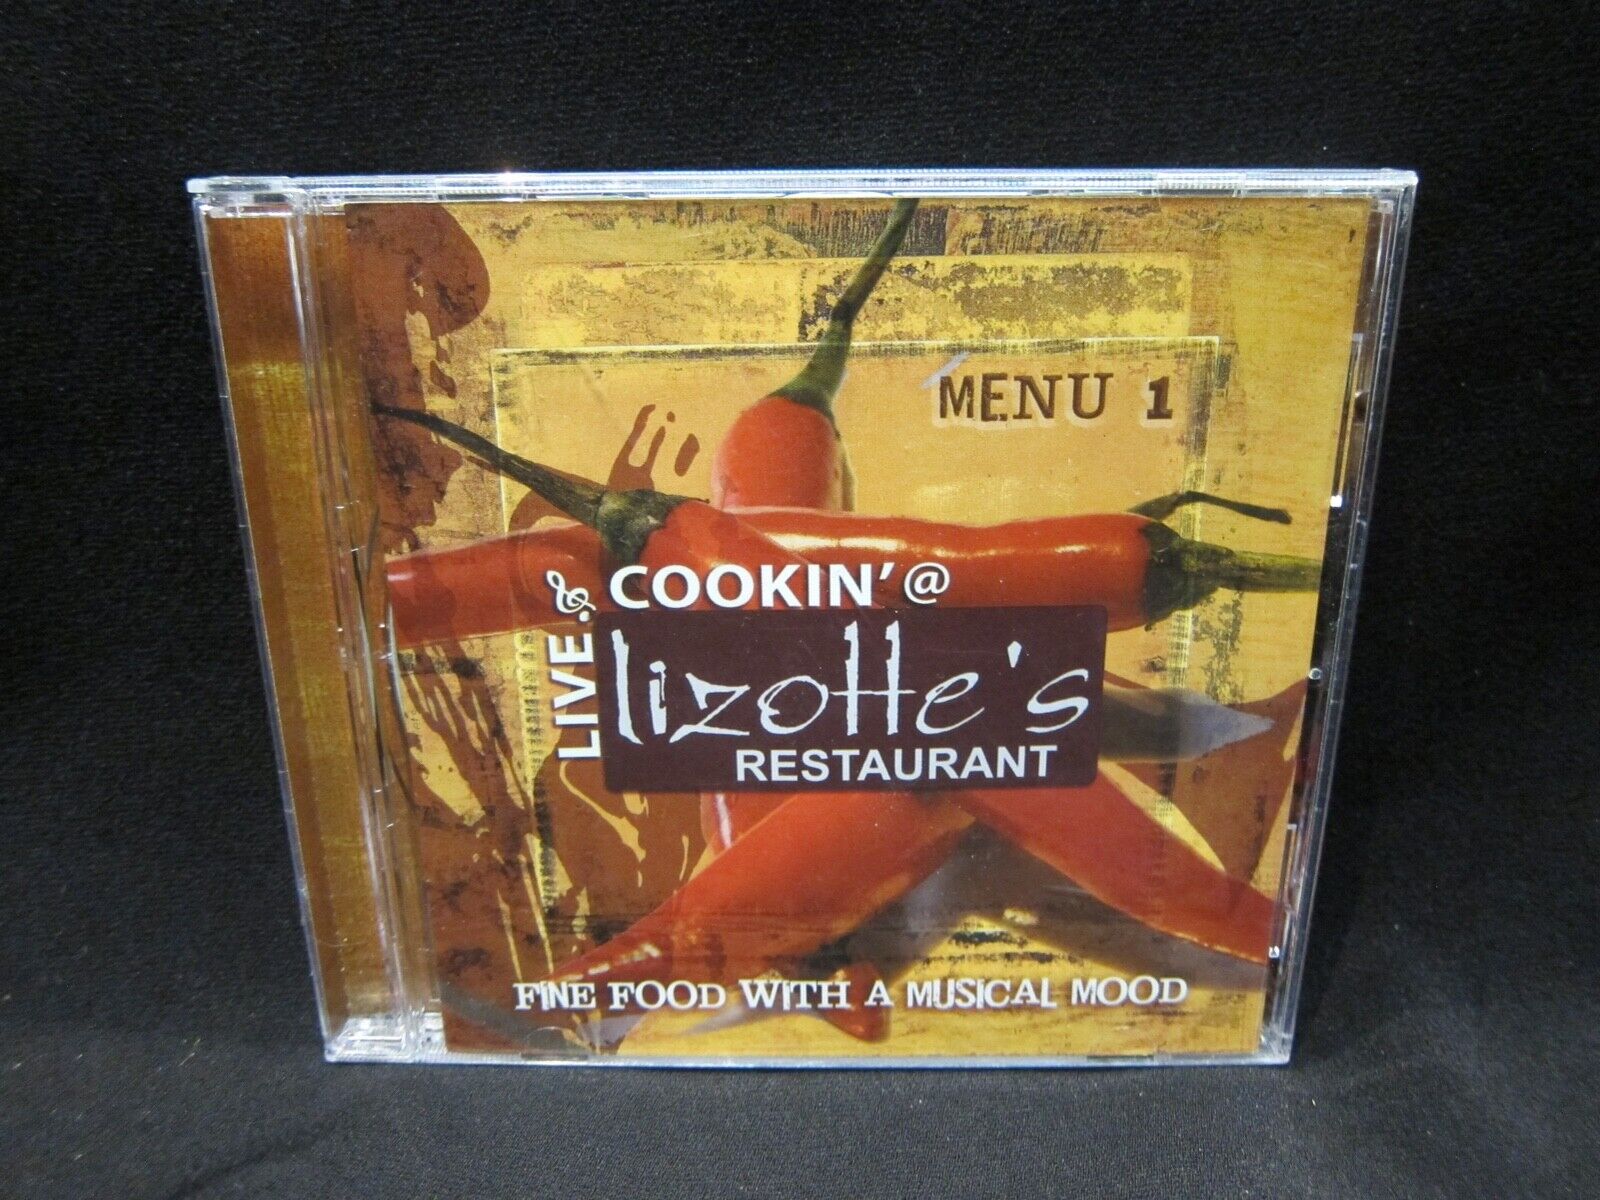 Live & Cookin' @ Lizotte's Restaurant (Menu 1) - NM - NEW CASE